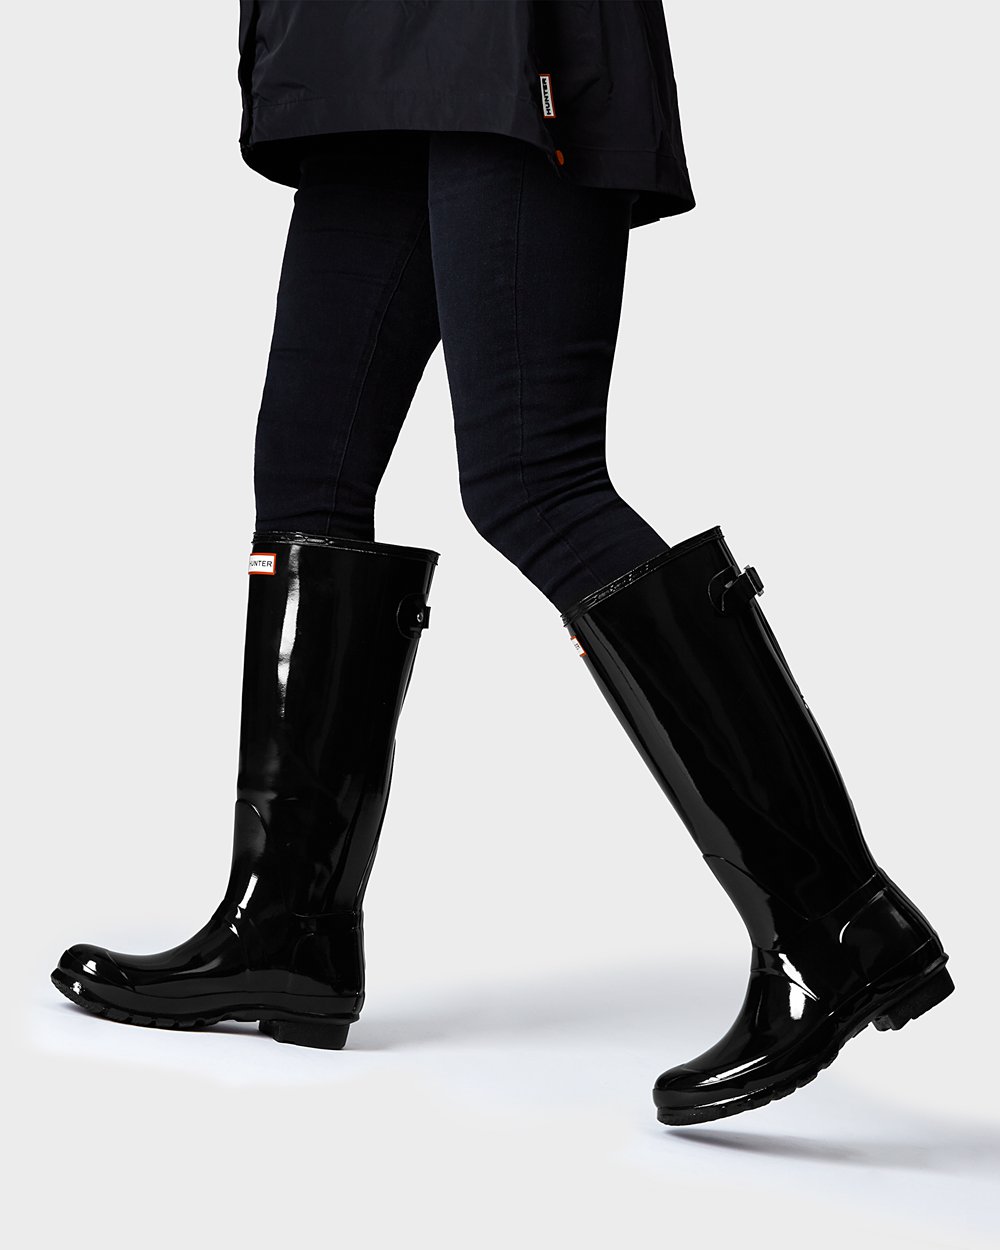 Womens Tall Rain Boots - Hunter Original Back Adjustable Gloss (64ZJSTHAK) - Black